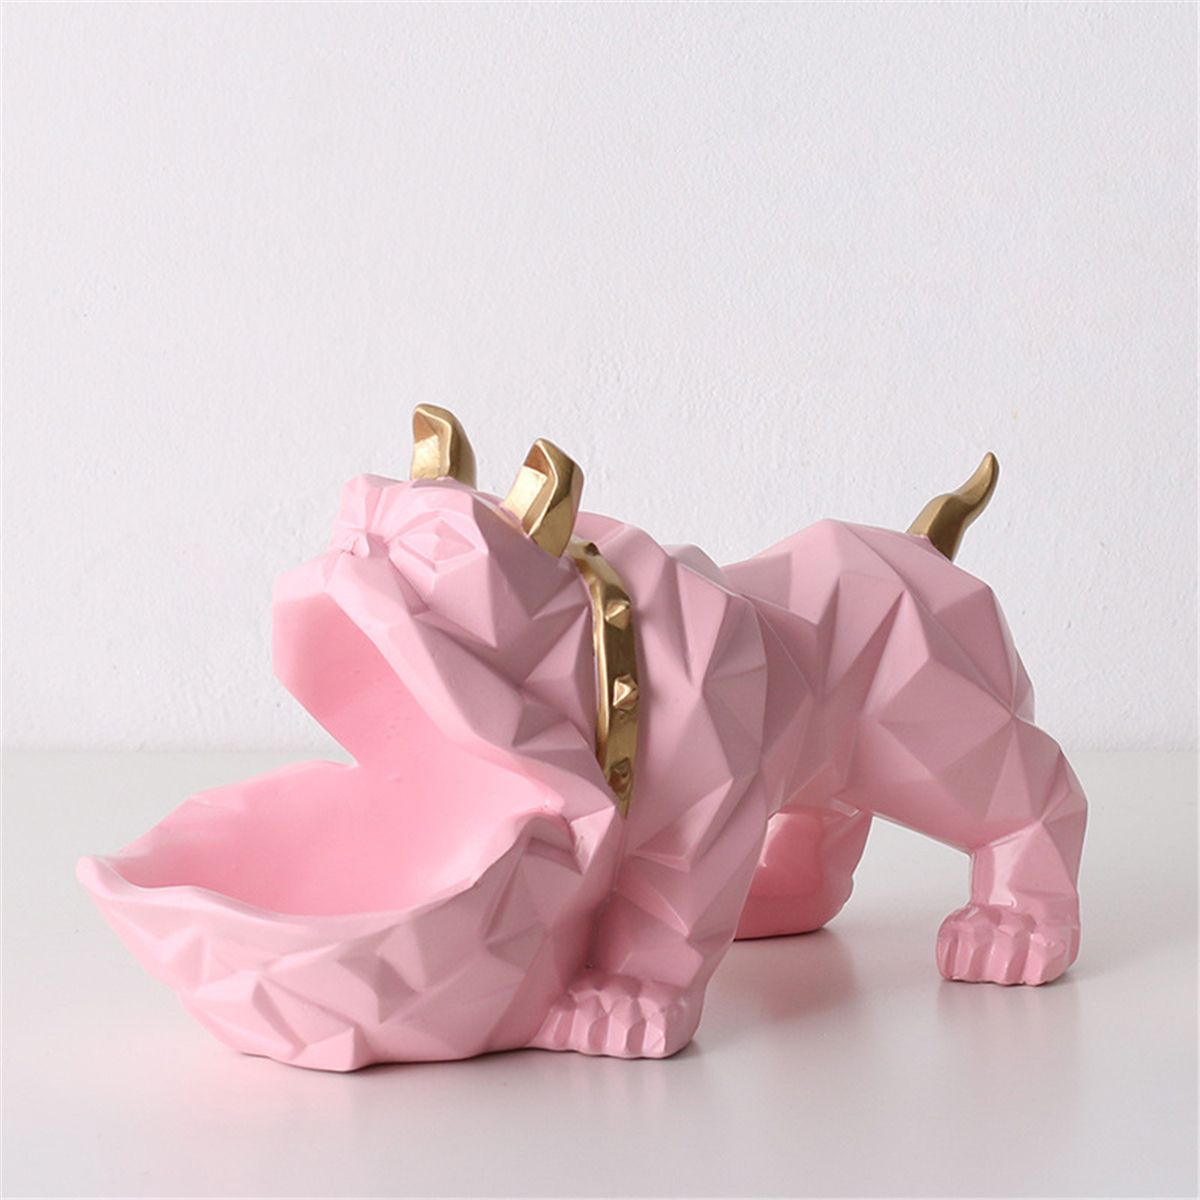 Bulldog-Animal-Sculpture-Puppy-Dog-Statue-Figure-Ornament-Gift-Decorations-1464229